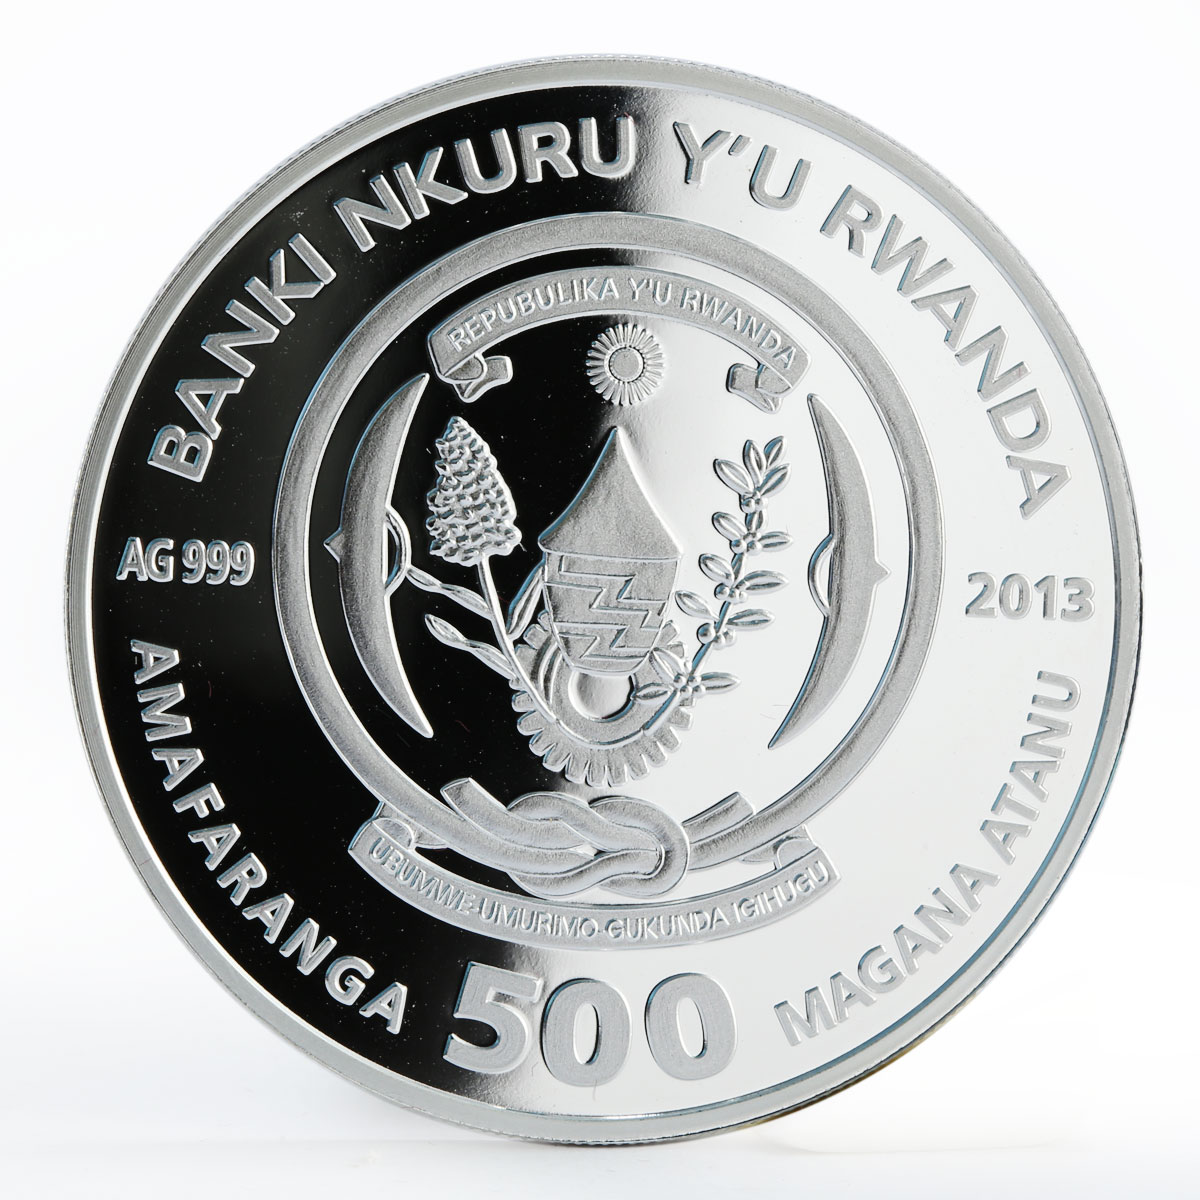 Rwanda 500 francs Year of the Snake Harmony silver coin 2013